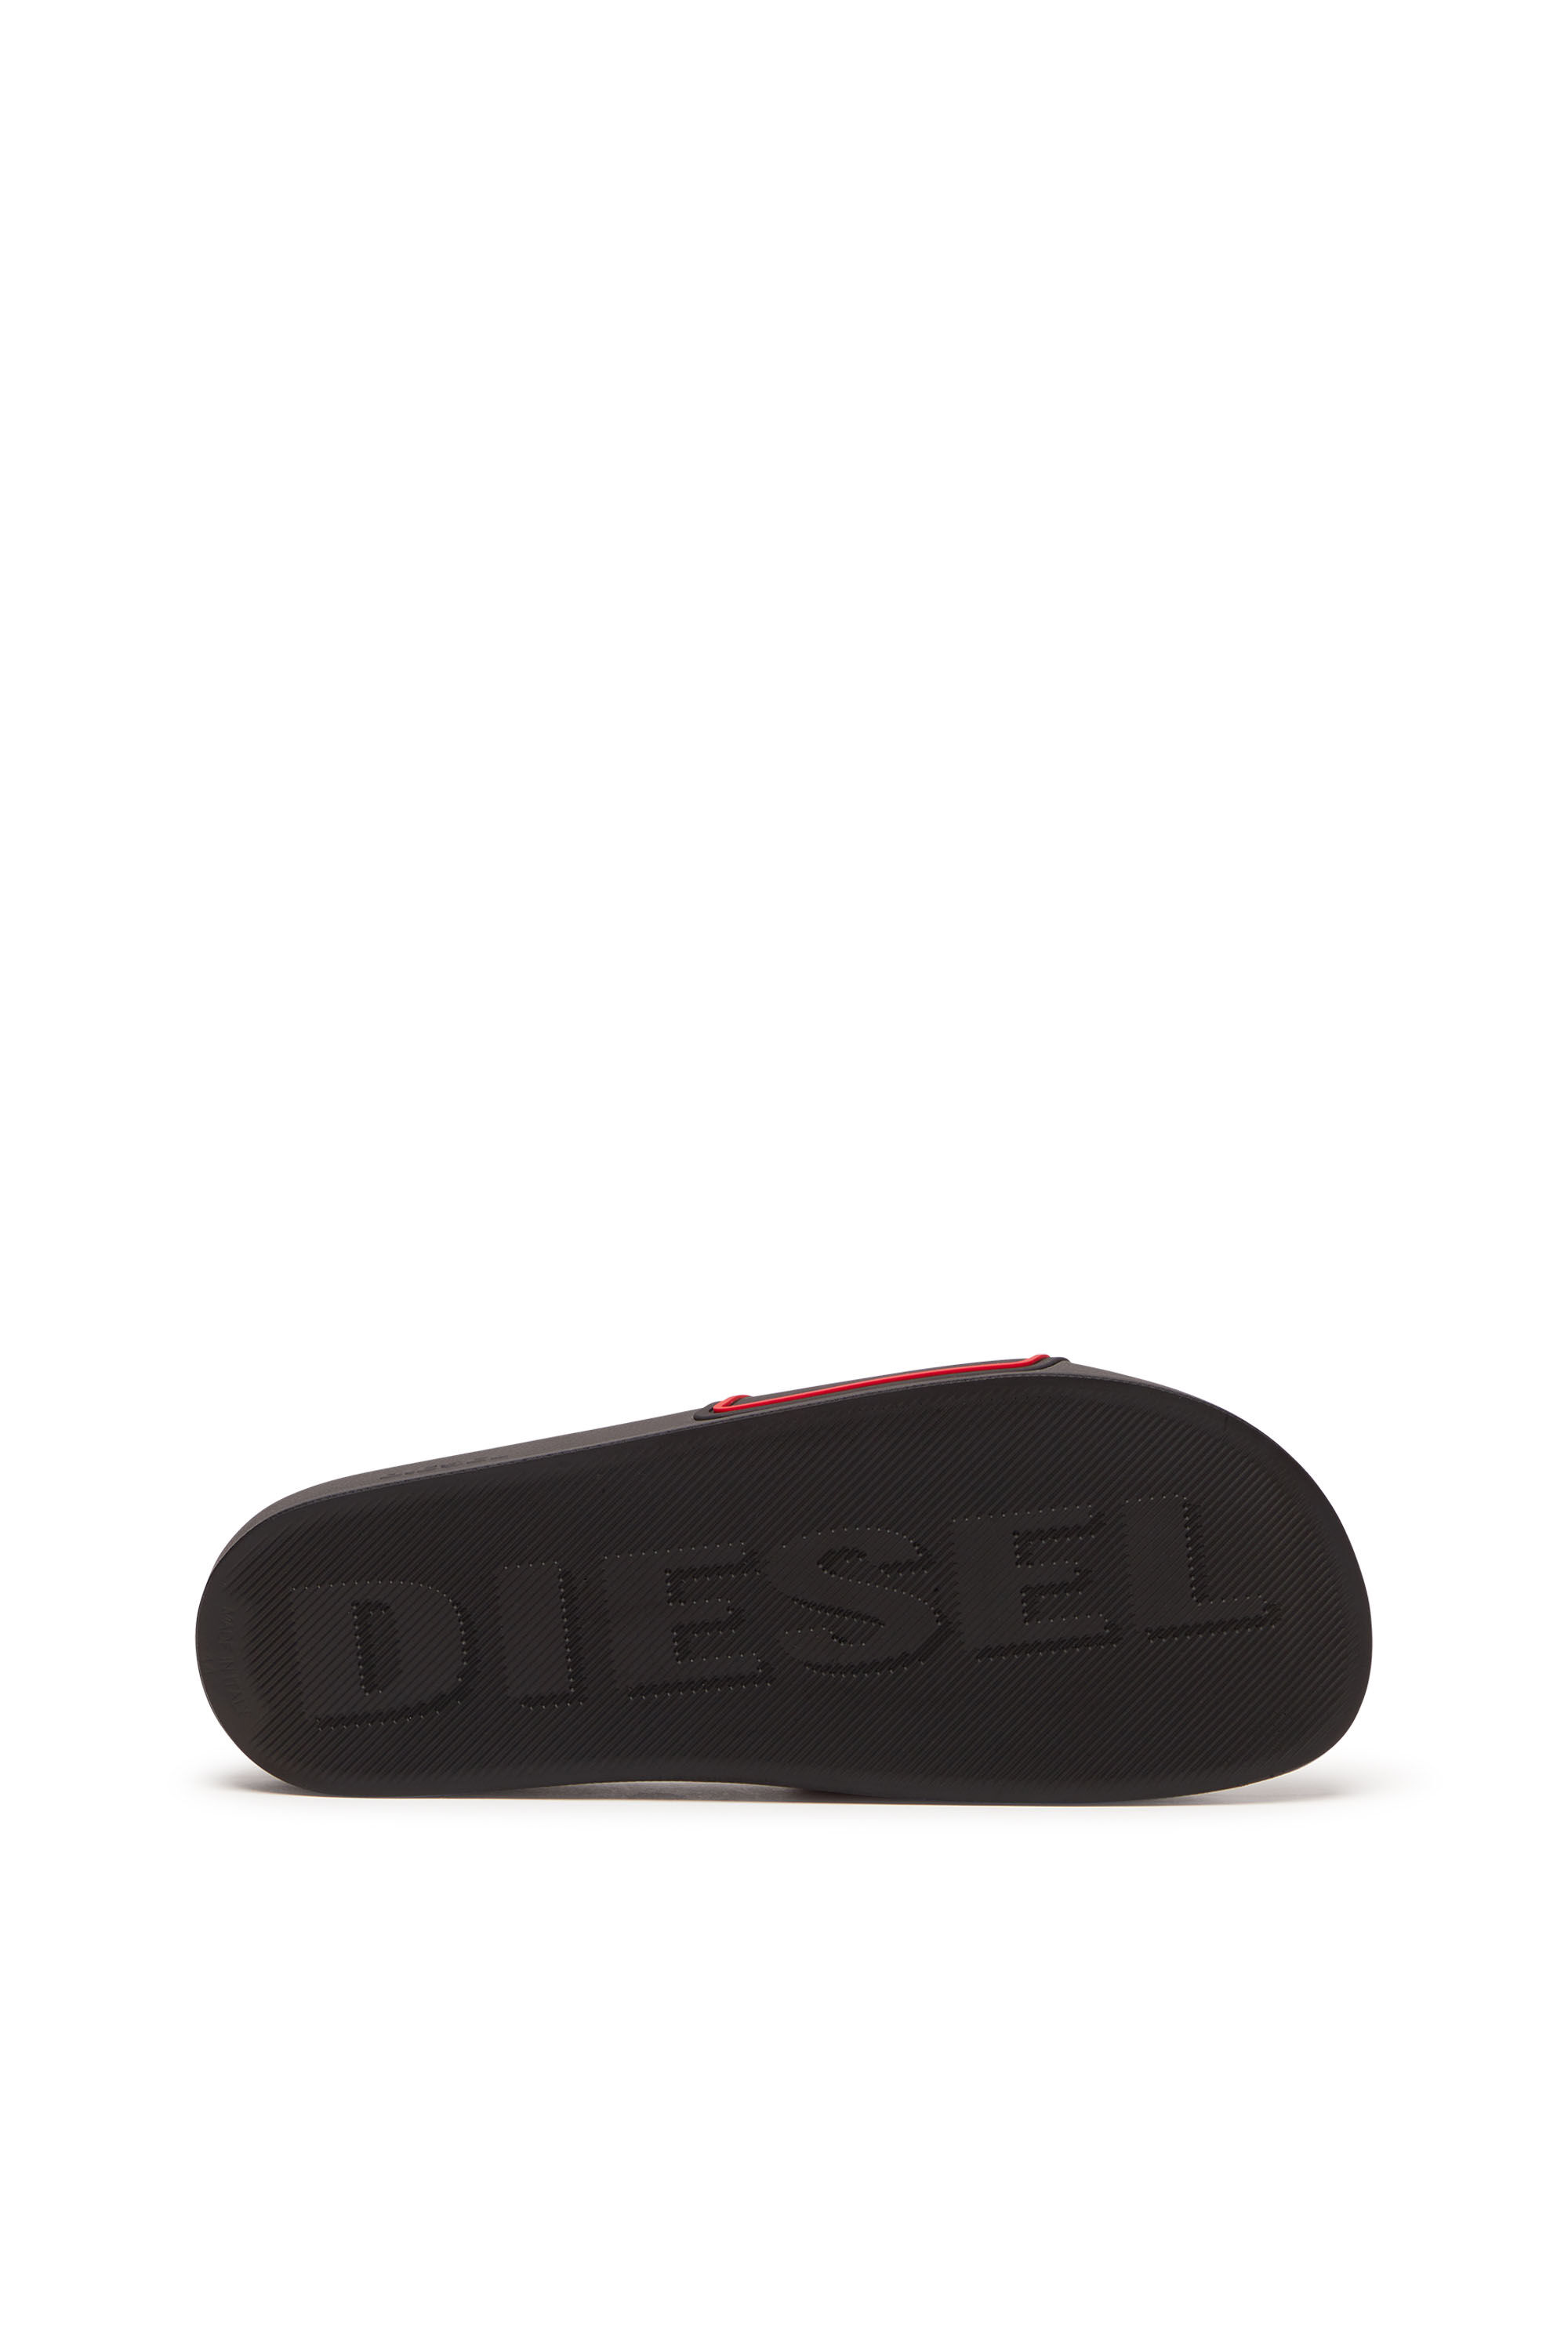 Diesel - SA-MAYEMI CC, Black/Red - Image 5